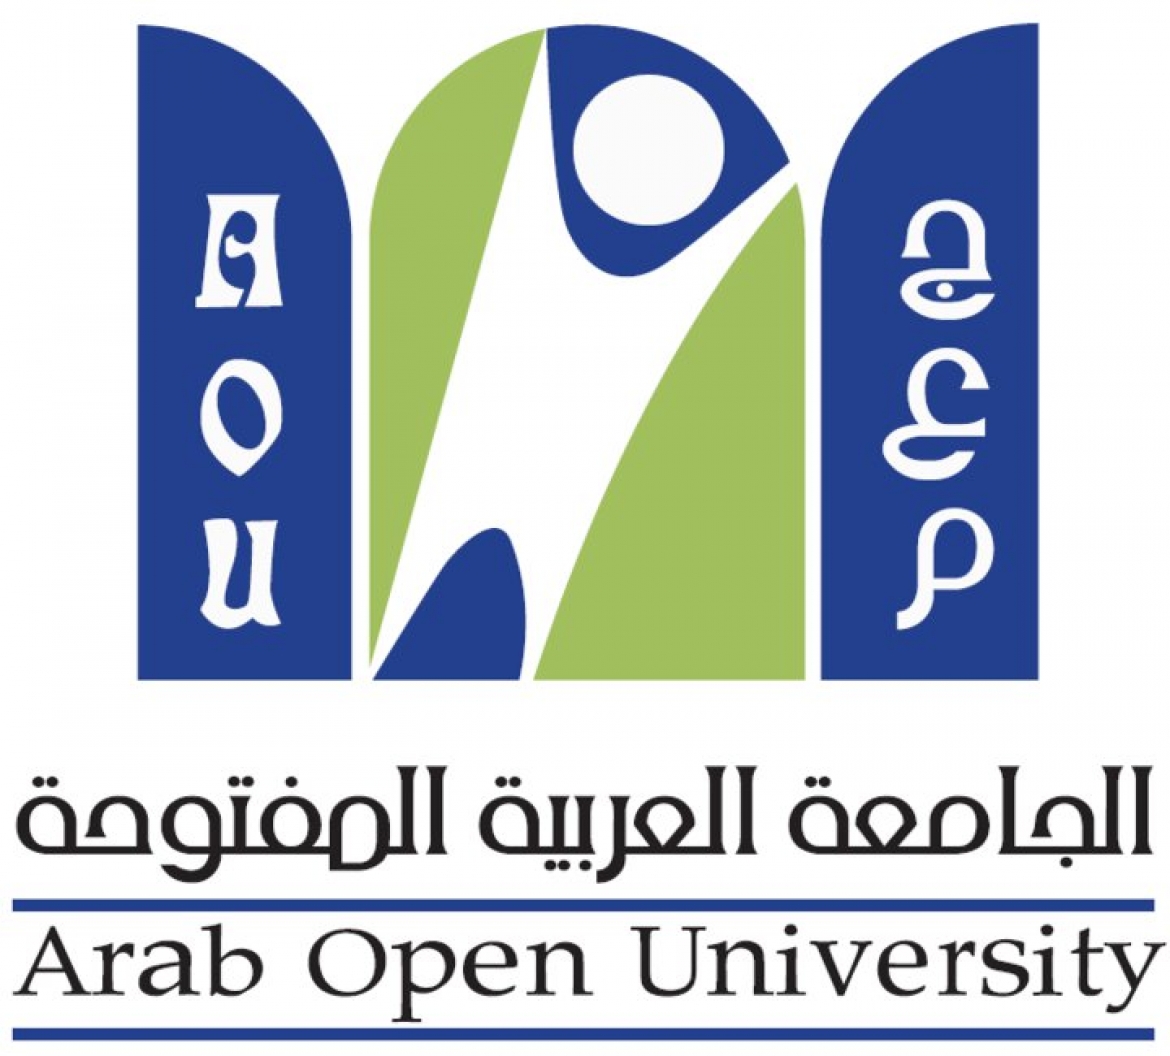 Arab Open University, AOU